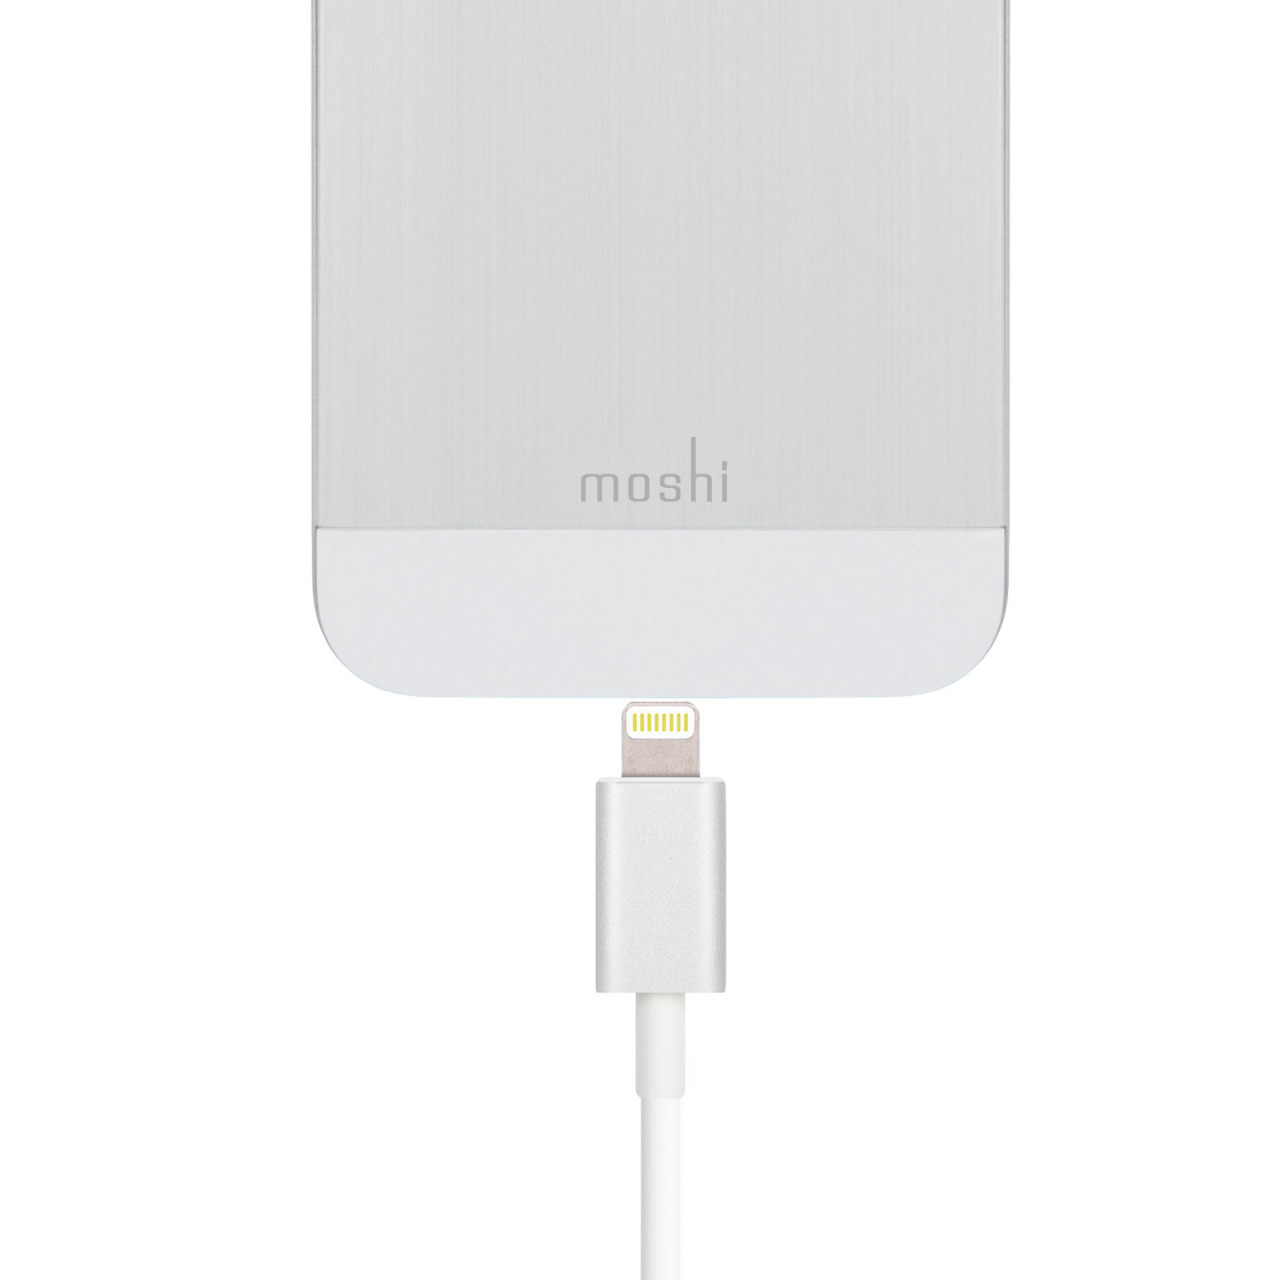 Moshi USB